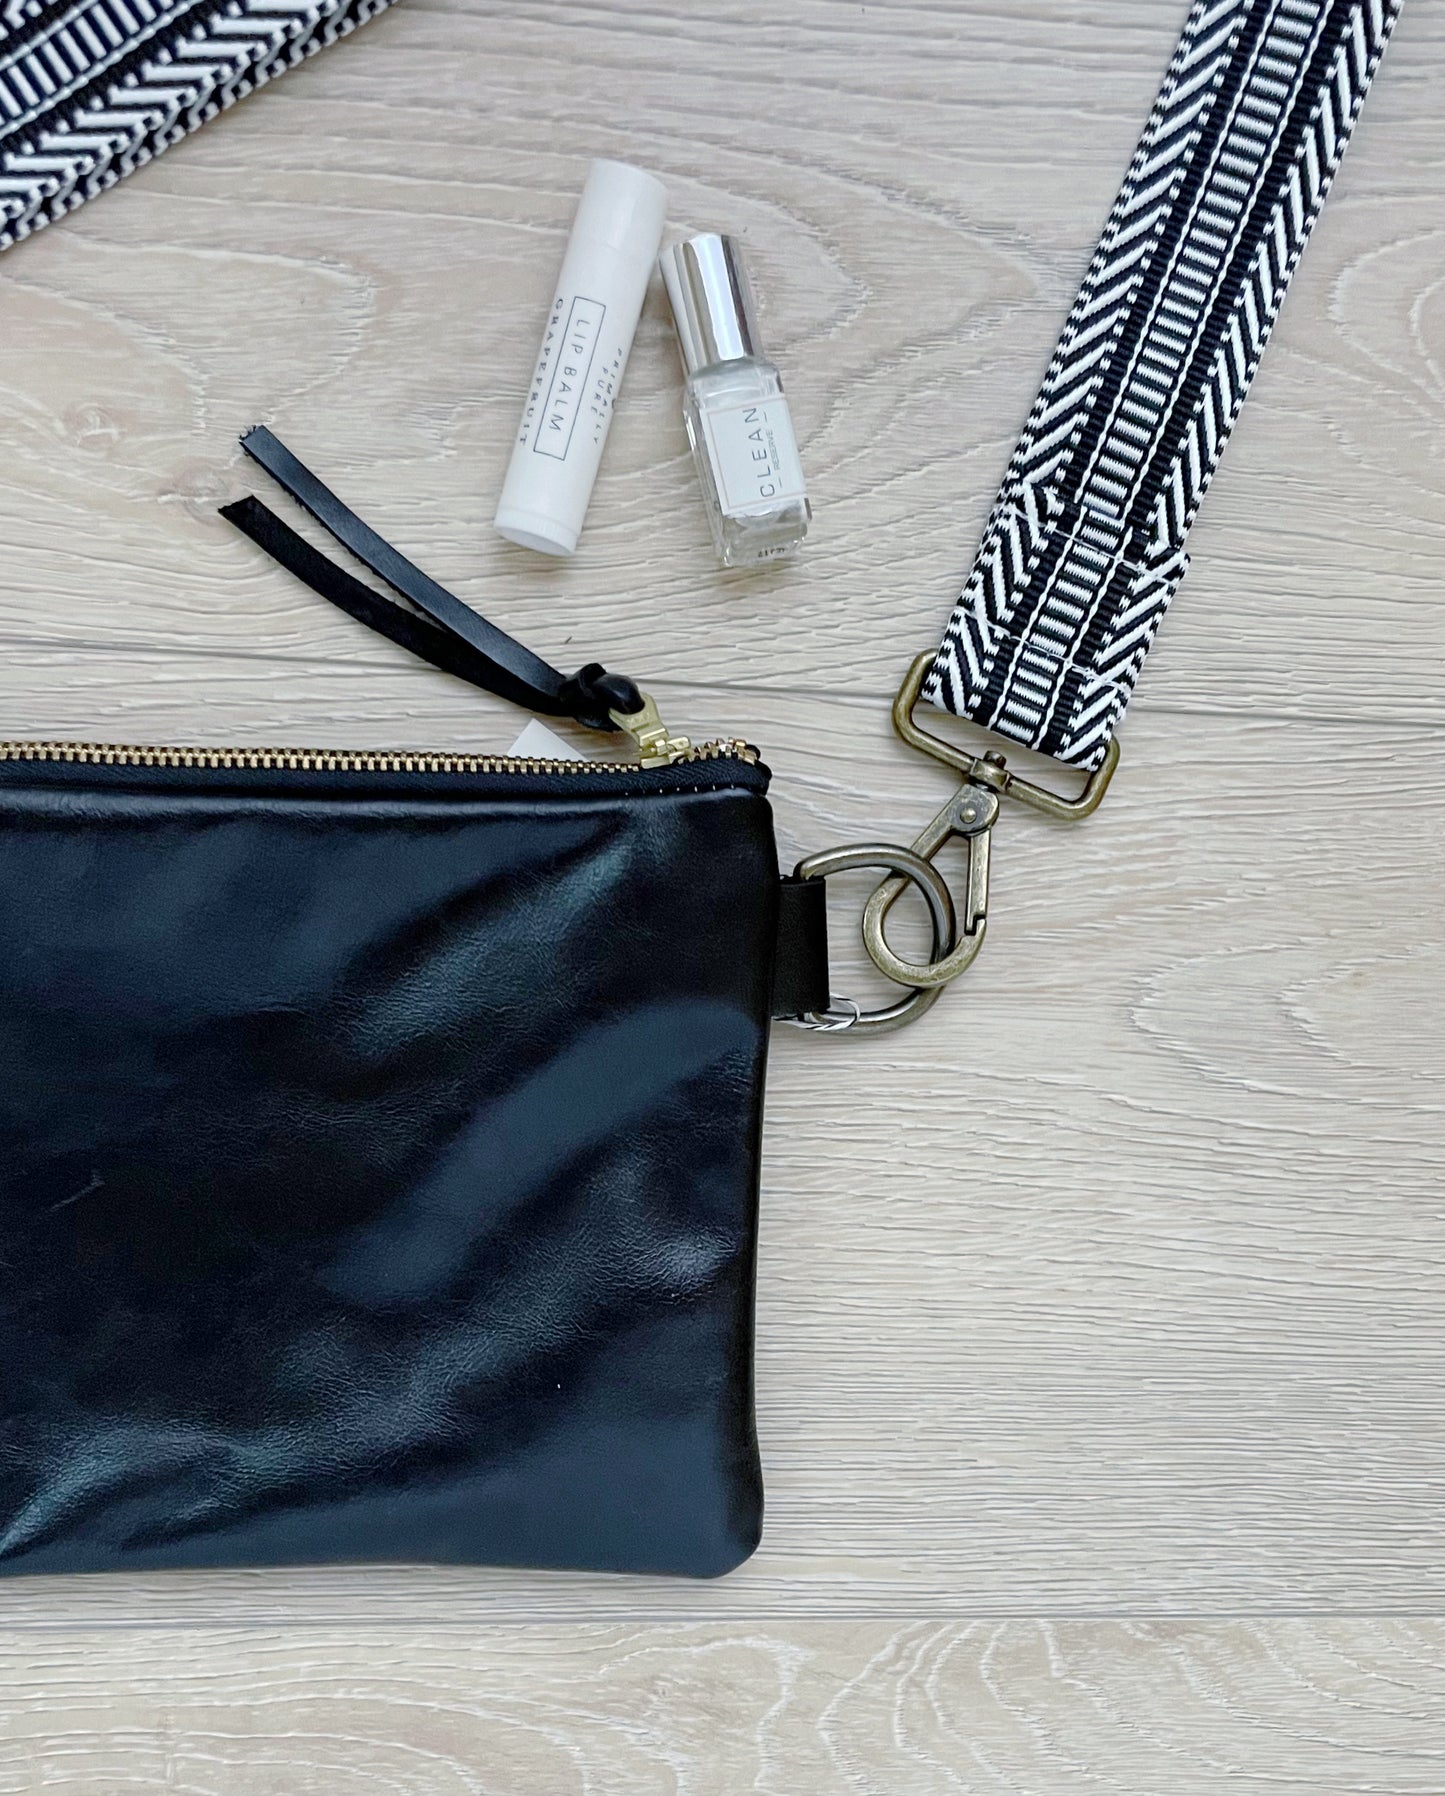 Black Leather cross body purse